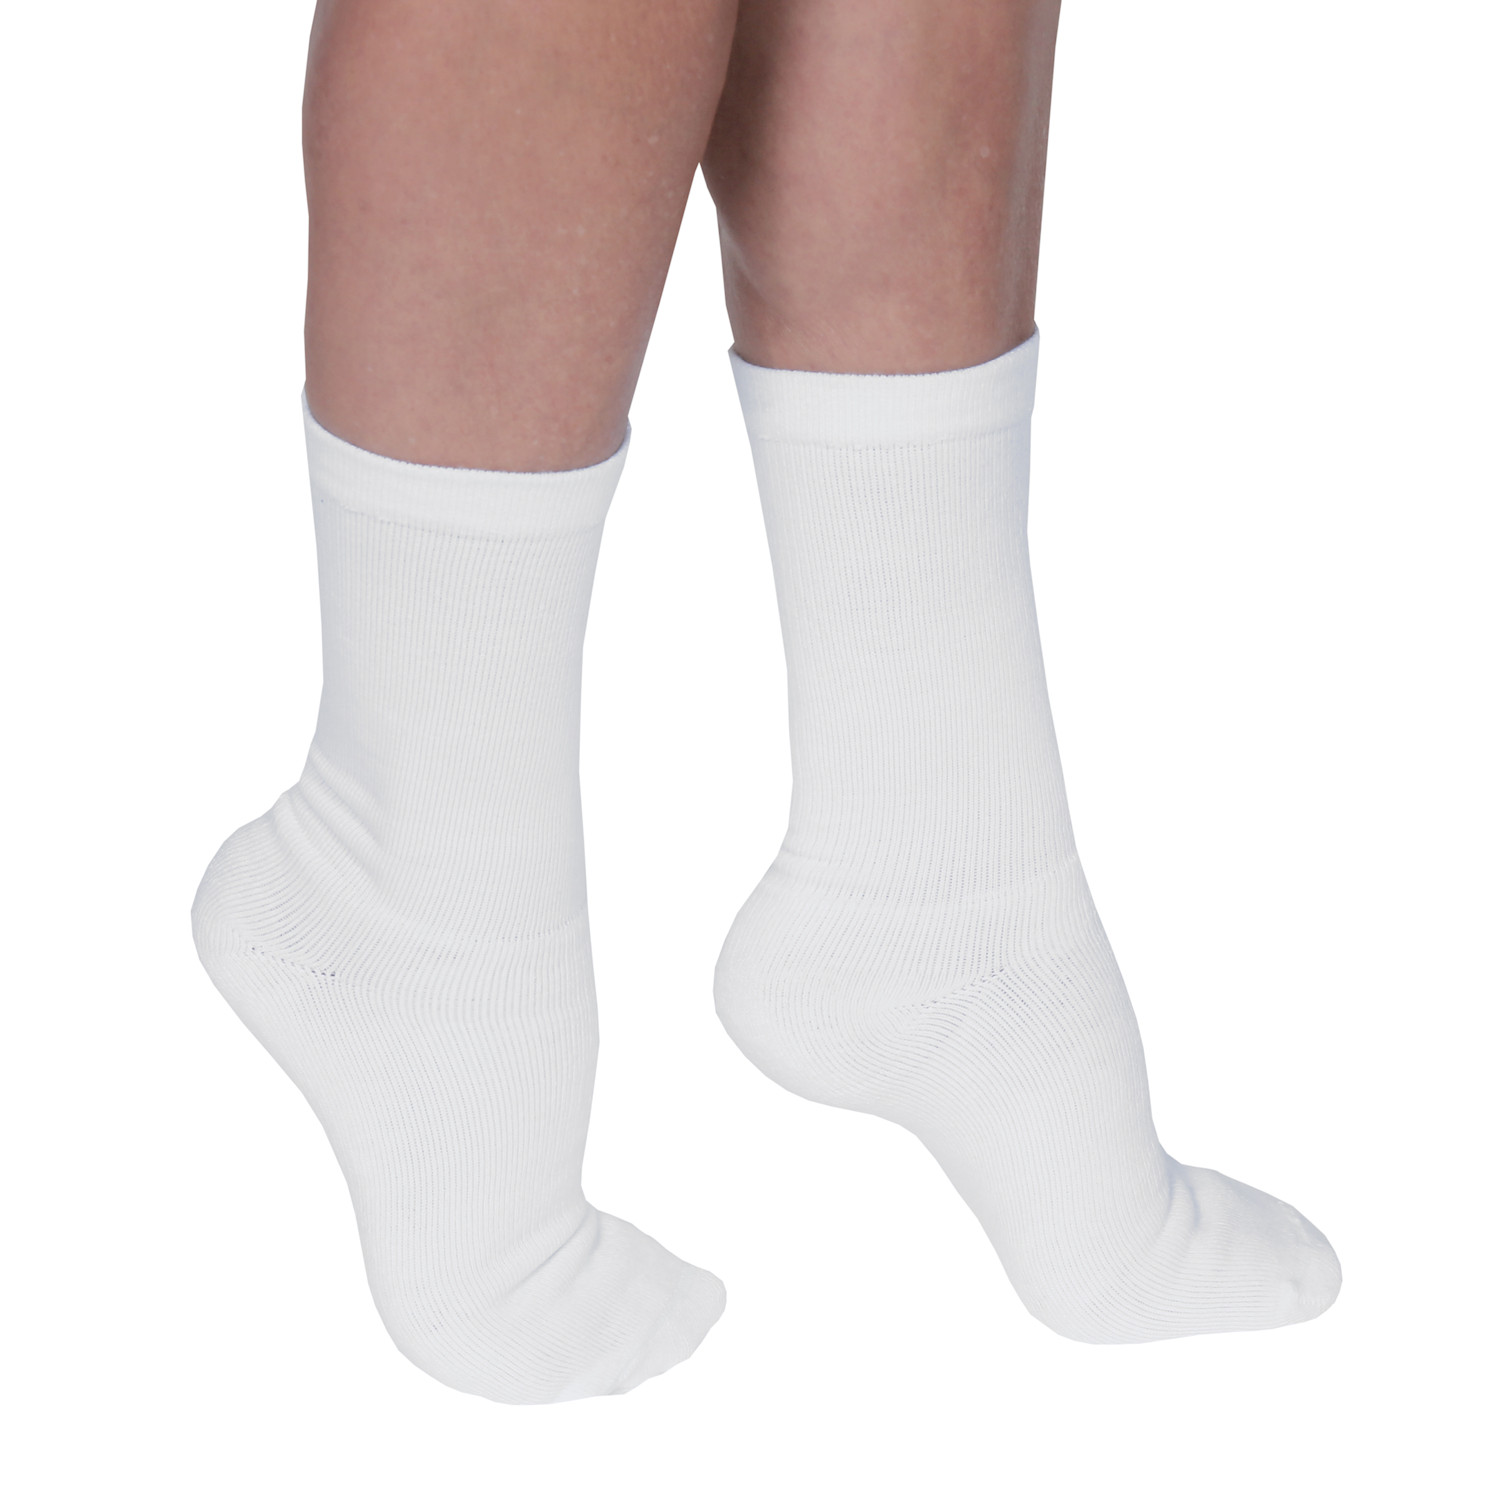 Support Plus Coolmax Unisex Opaque Mild Compression Crew Length Socks ...